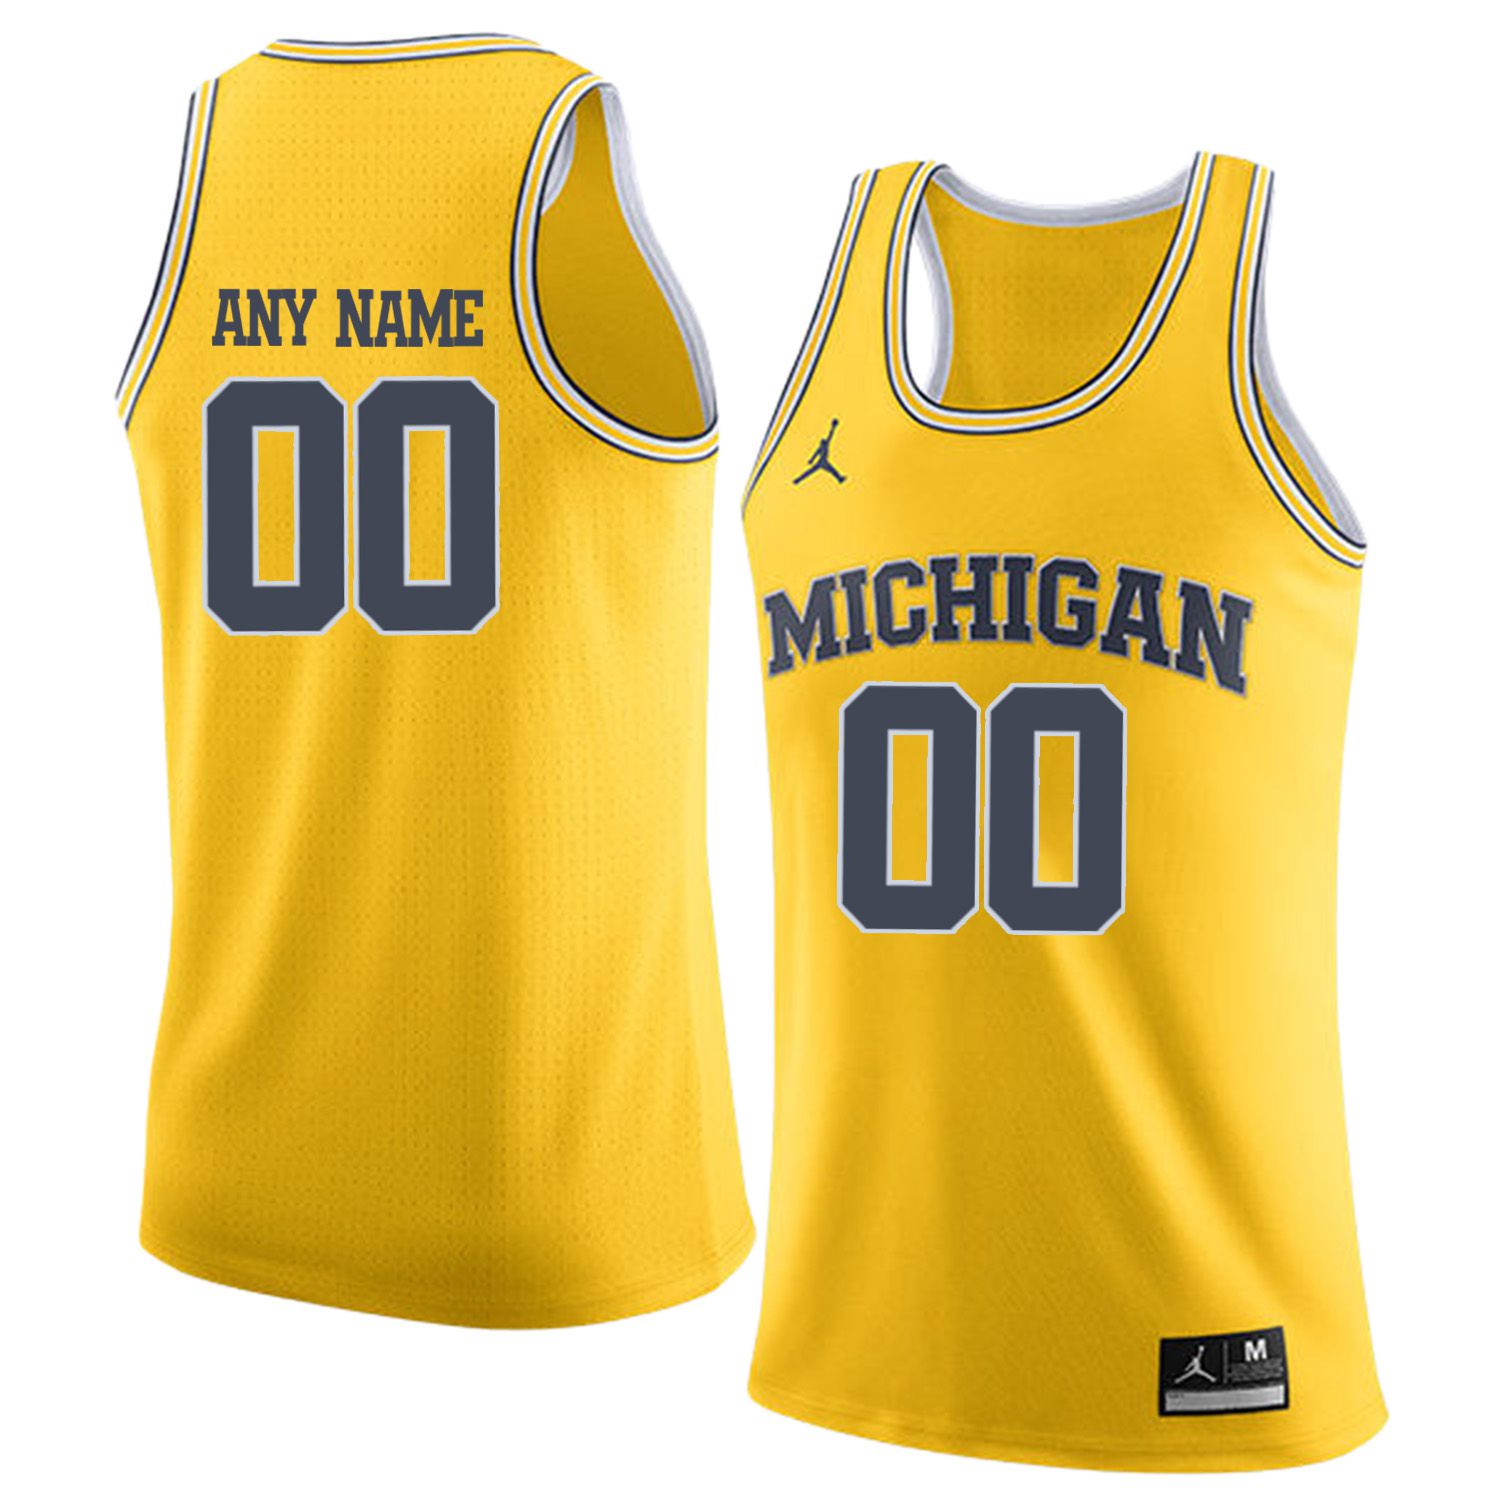 Men Jordan University of Michigan Basketball Yellow 00 Any name Customized NCAA Jerseys